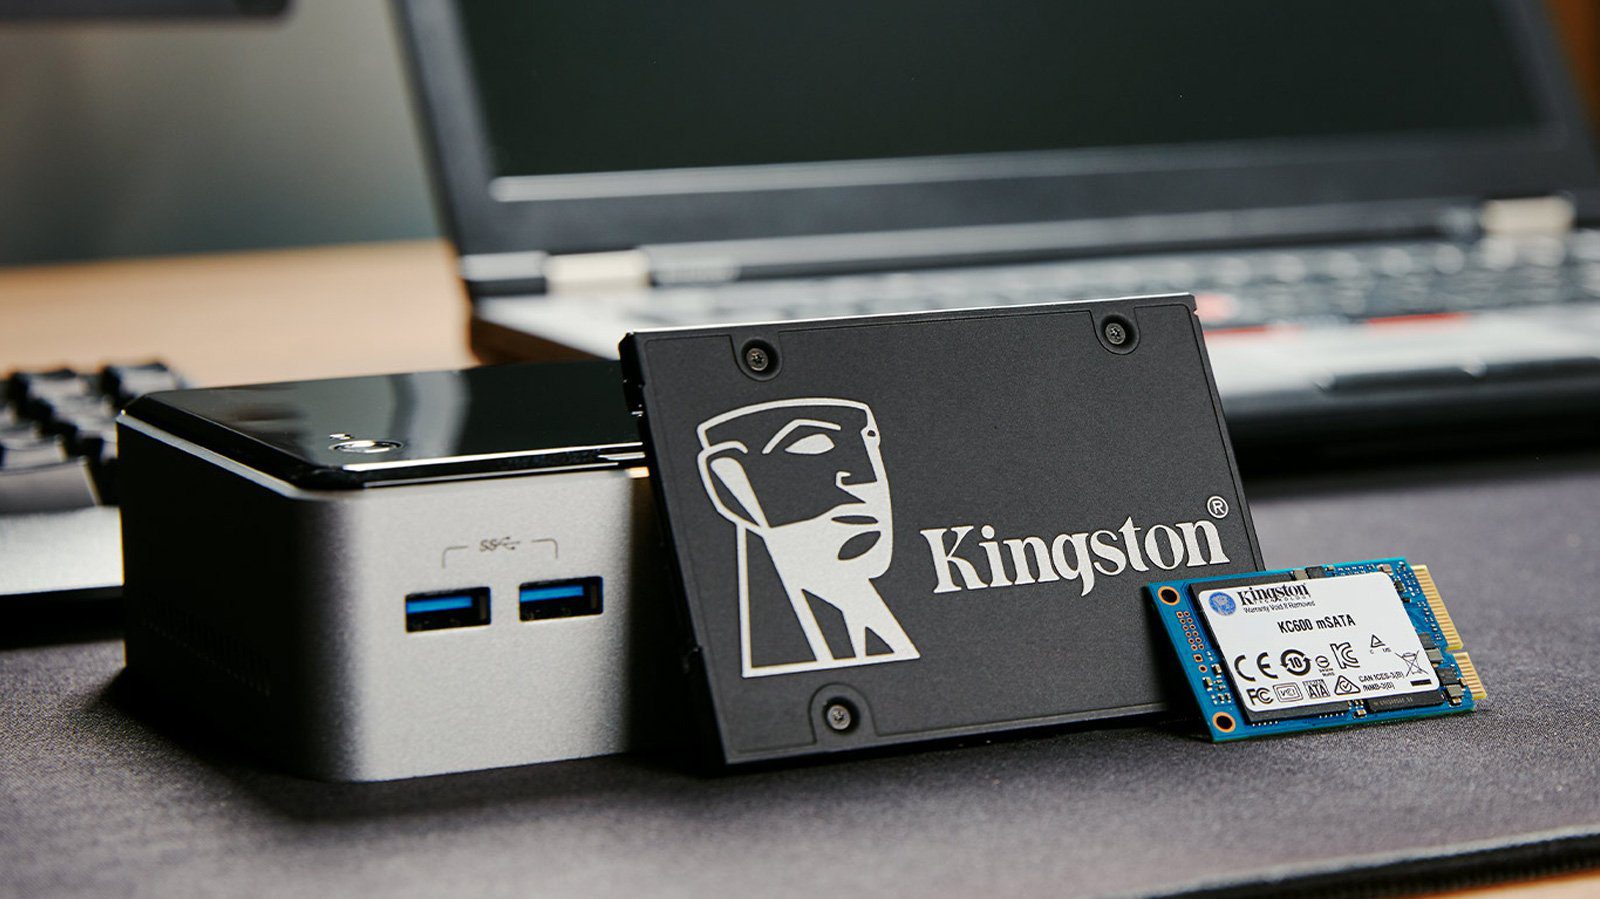 Kingston’s SSD firmware has Coldplay lyrics hidden within it – Source: www.bleepingcomputer.com